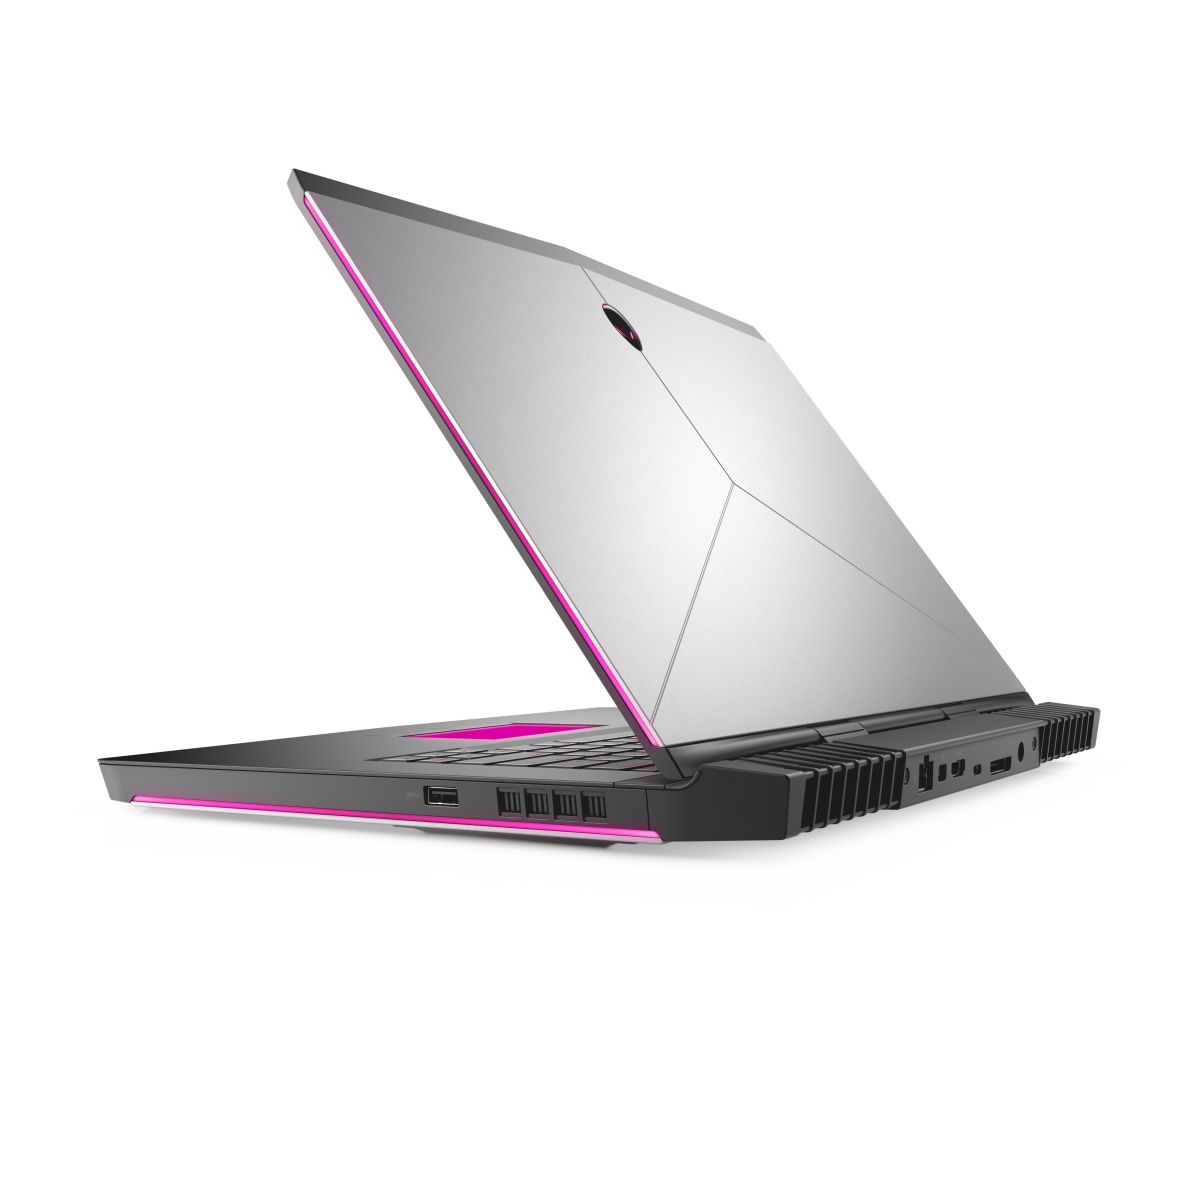 Alienware 15 R3 - AR3-1764 laptop specifications